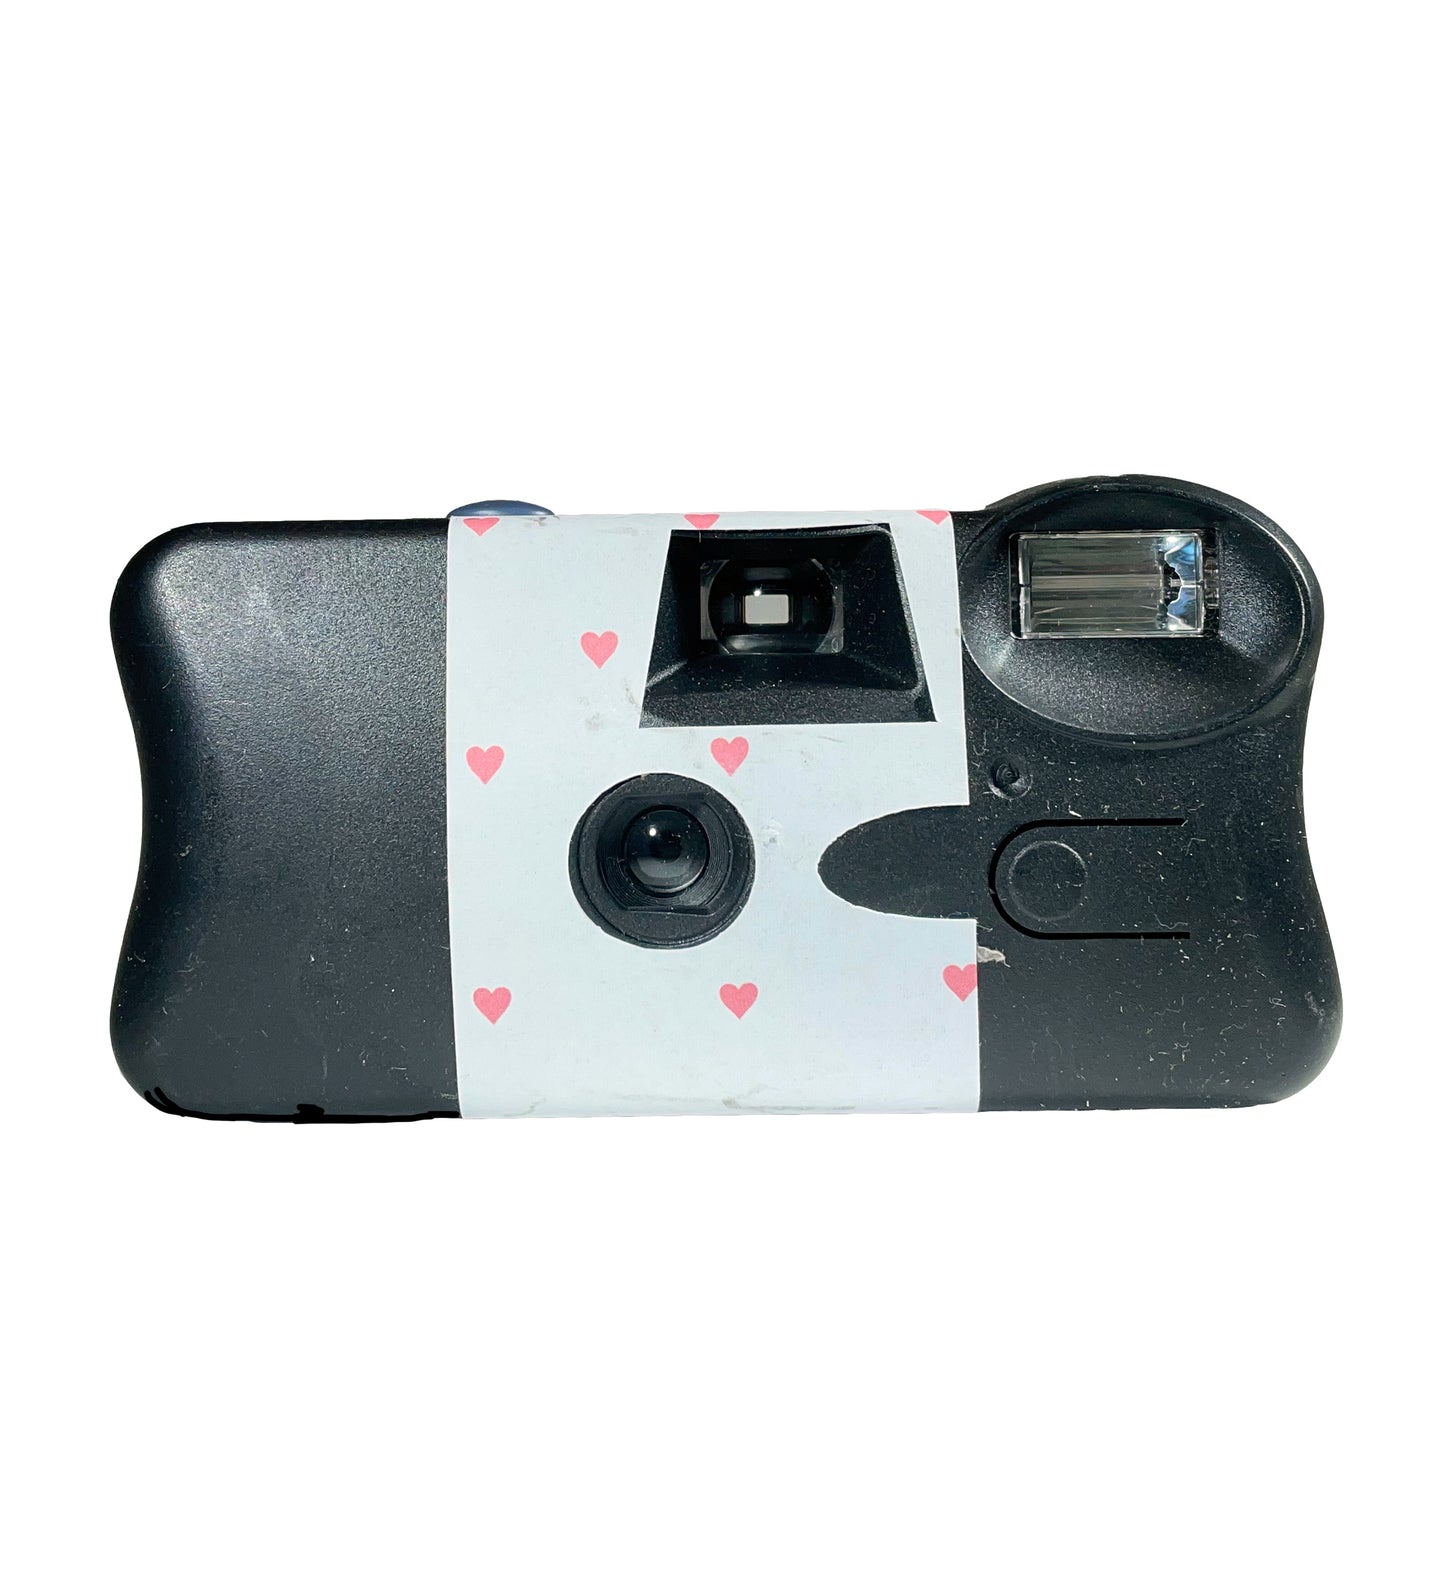 BKIFI Hearts 35mm Single Use Camera 27 Exposures (£16.99 incl VAT)